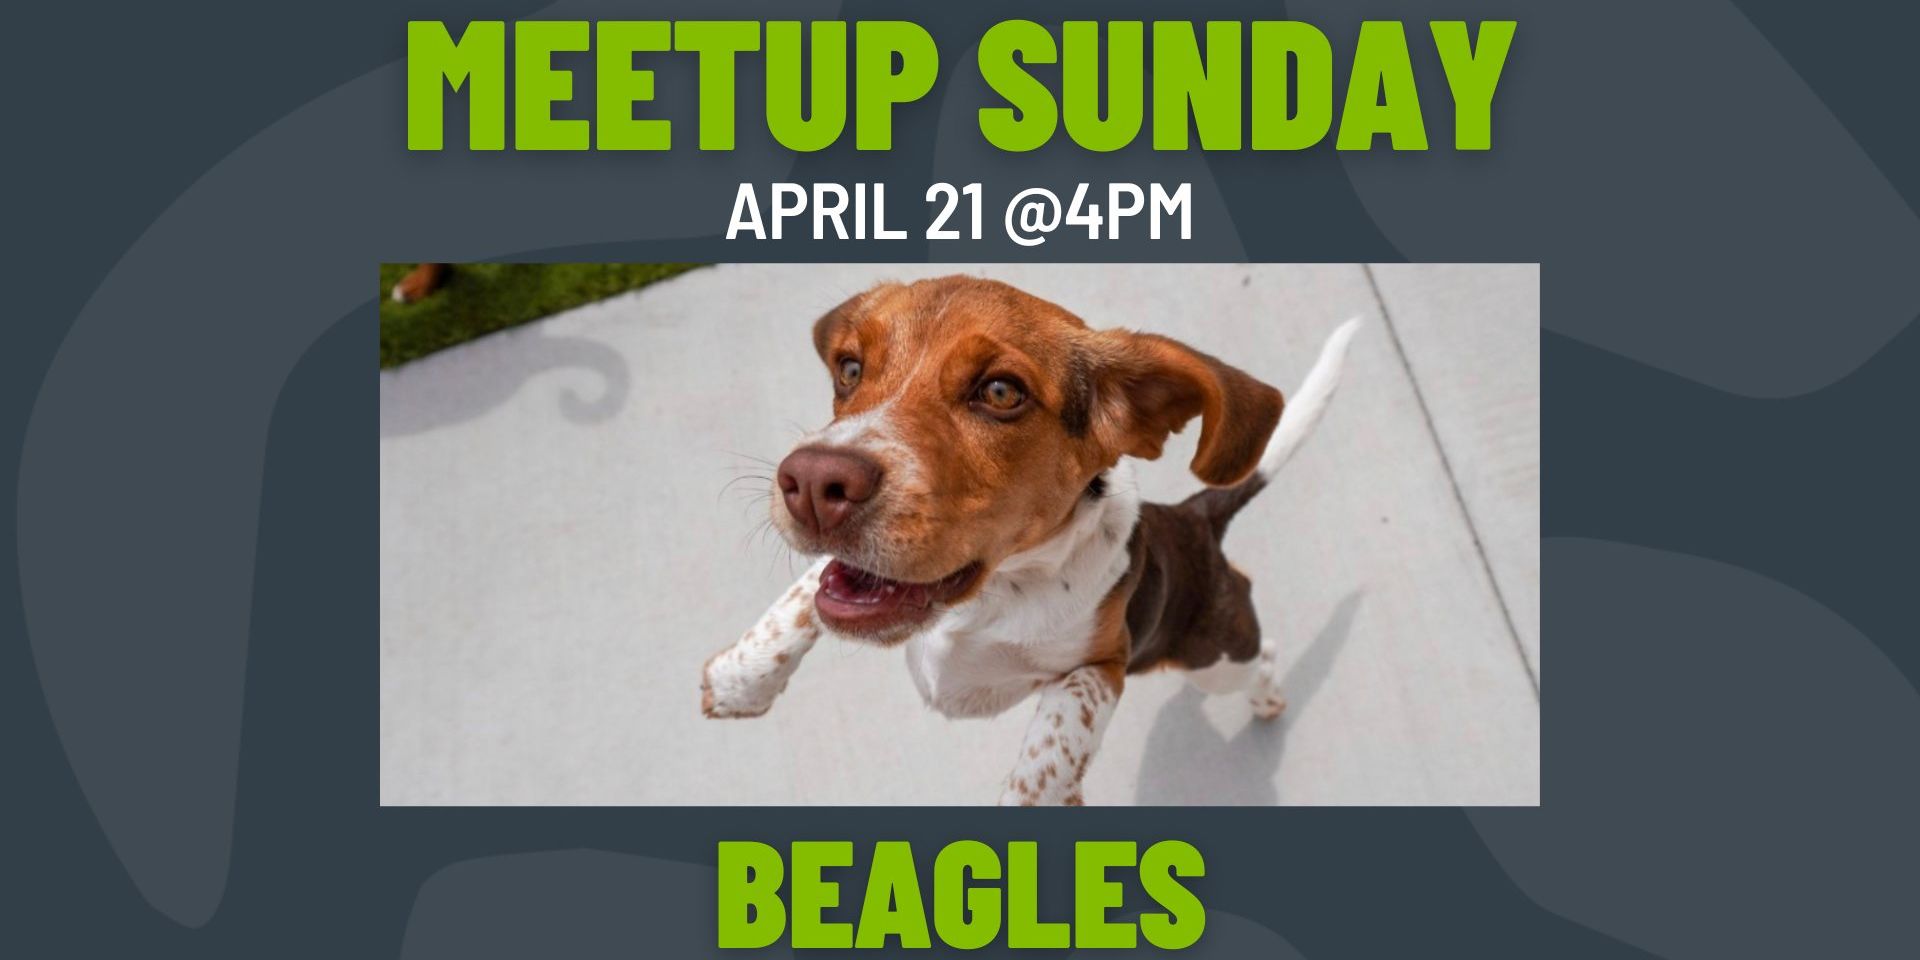 Meetup Sunday: Beagles promotional image